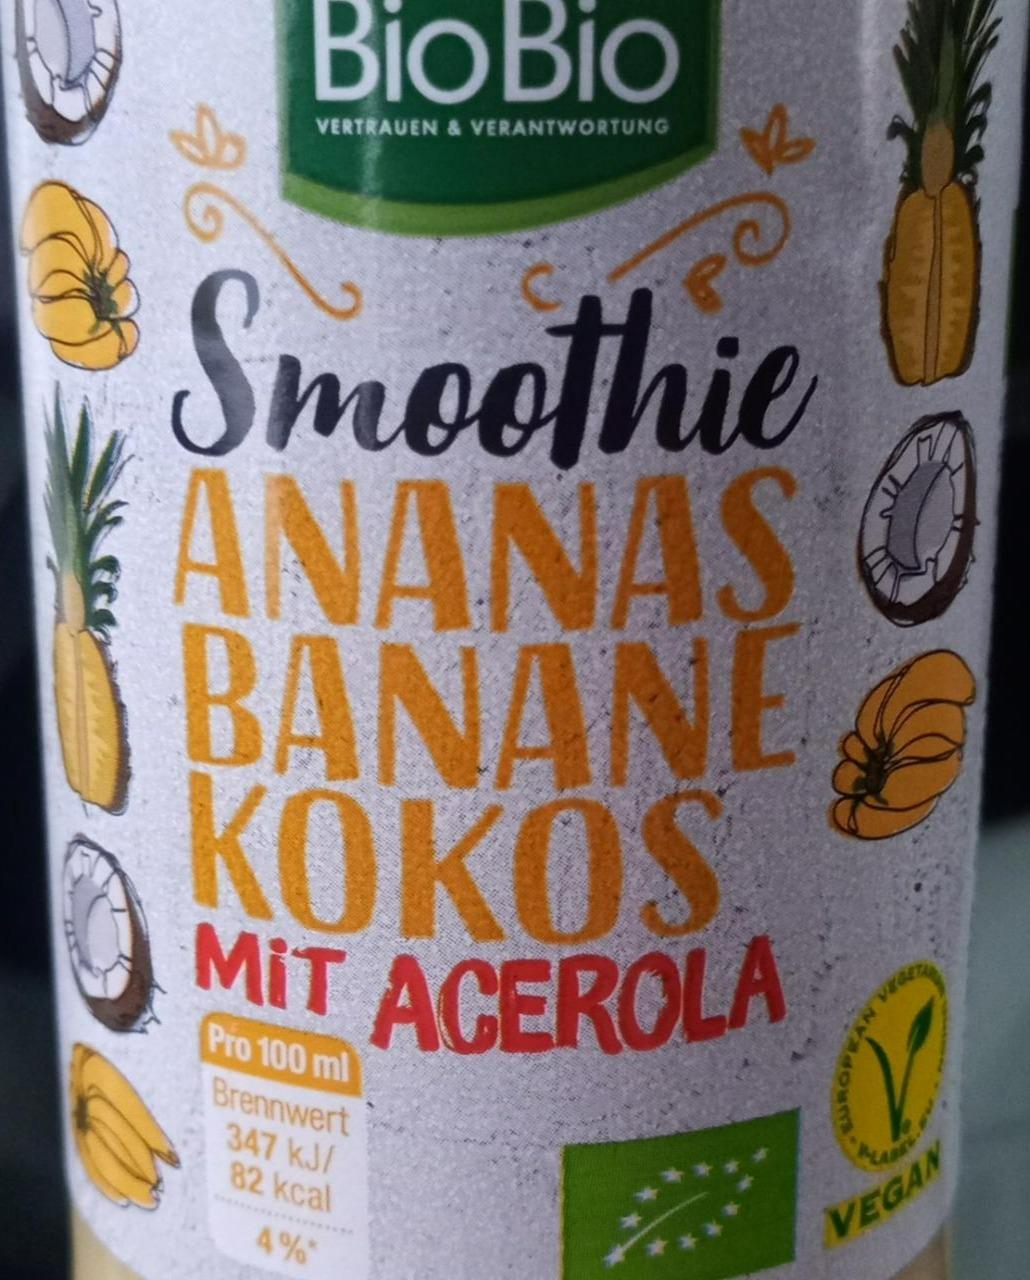 Fotografie - Smoothie Ananas Banane Kokos mit Acerola BioBio